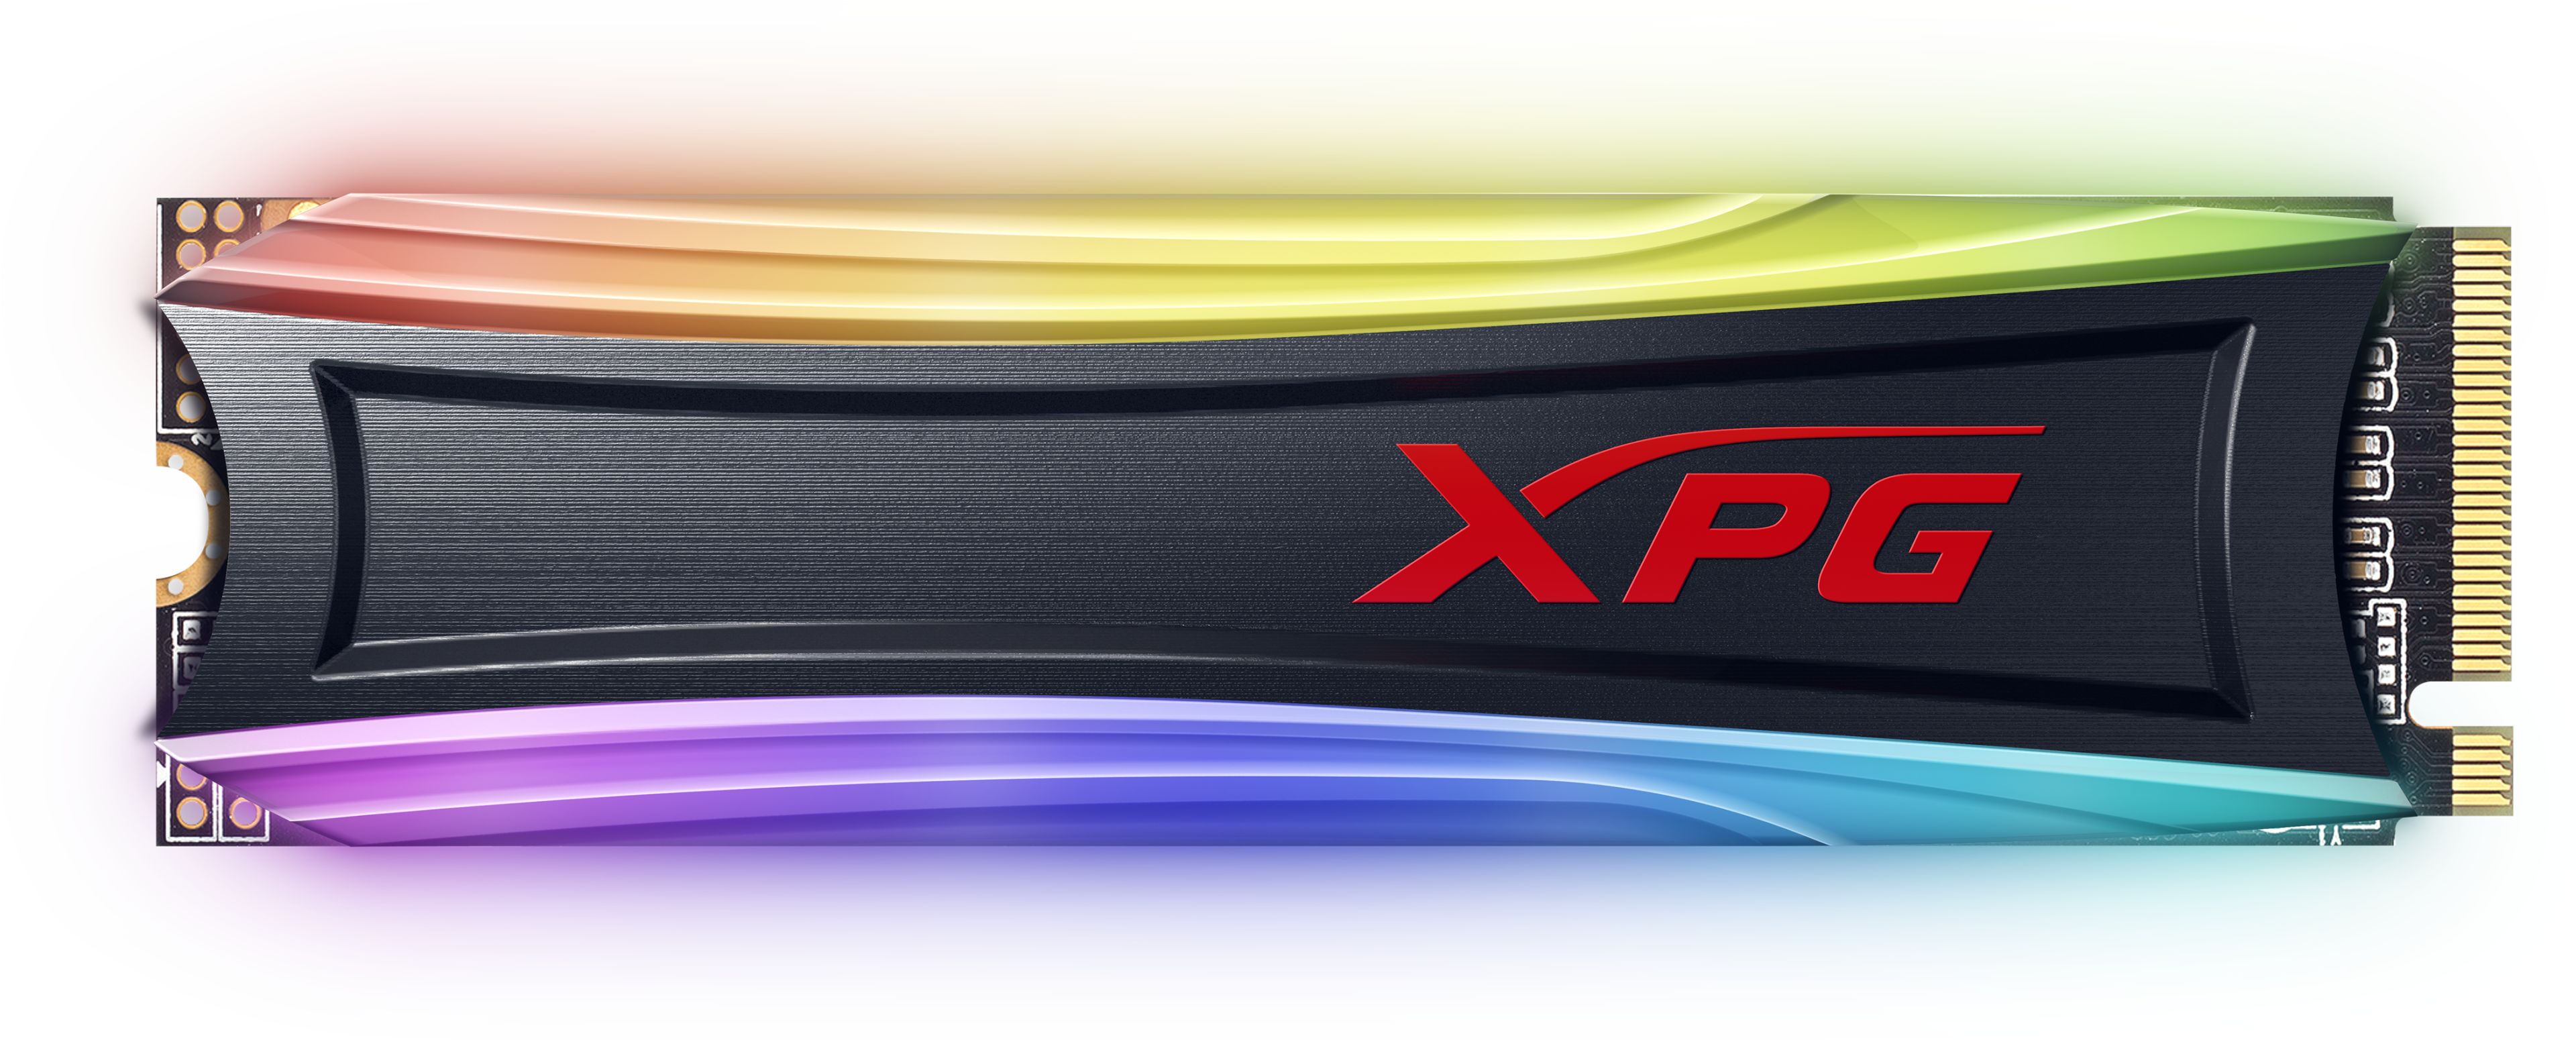 A data 900. SSD диск ADATA XPG Spectrix s40g RGB 512гб. A-data XPG Spectrix s40g RGB 512gb. XPG Spectrix s40g. SSD M.2 накопитель ADATA XPG Spectrix s40g RGB.